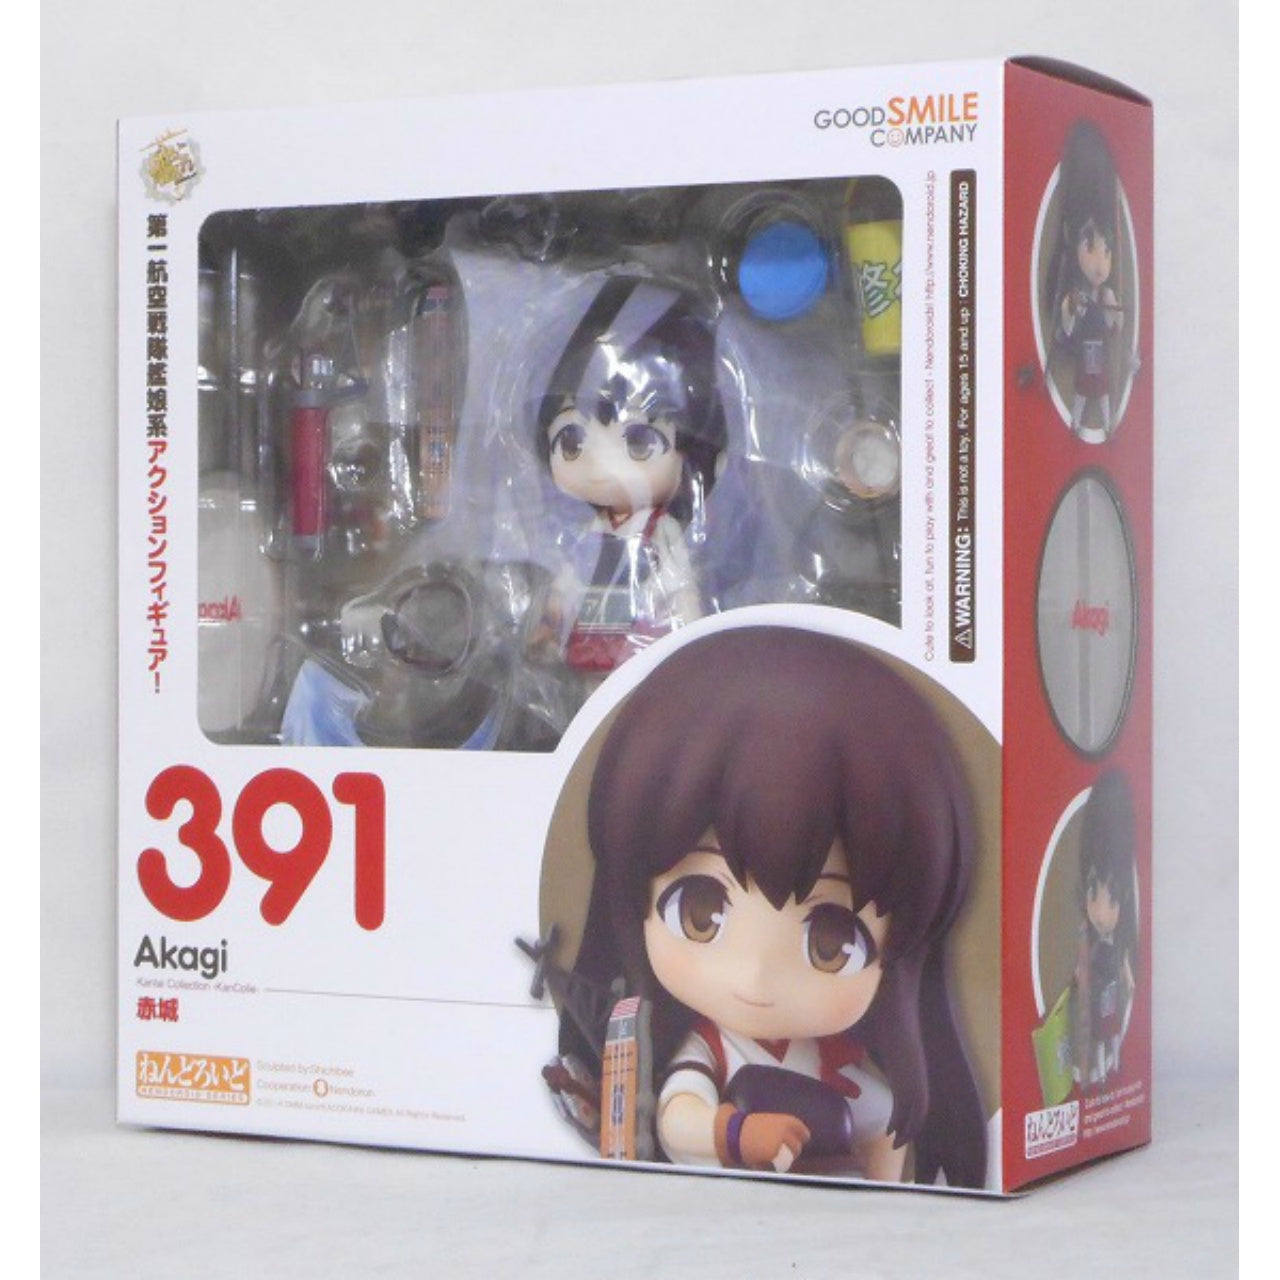 Nendoroid No.391 Akagi with Goodsmile Online Shop Bonus Item, animota